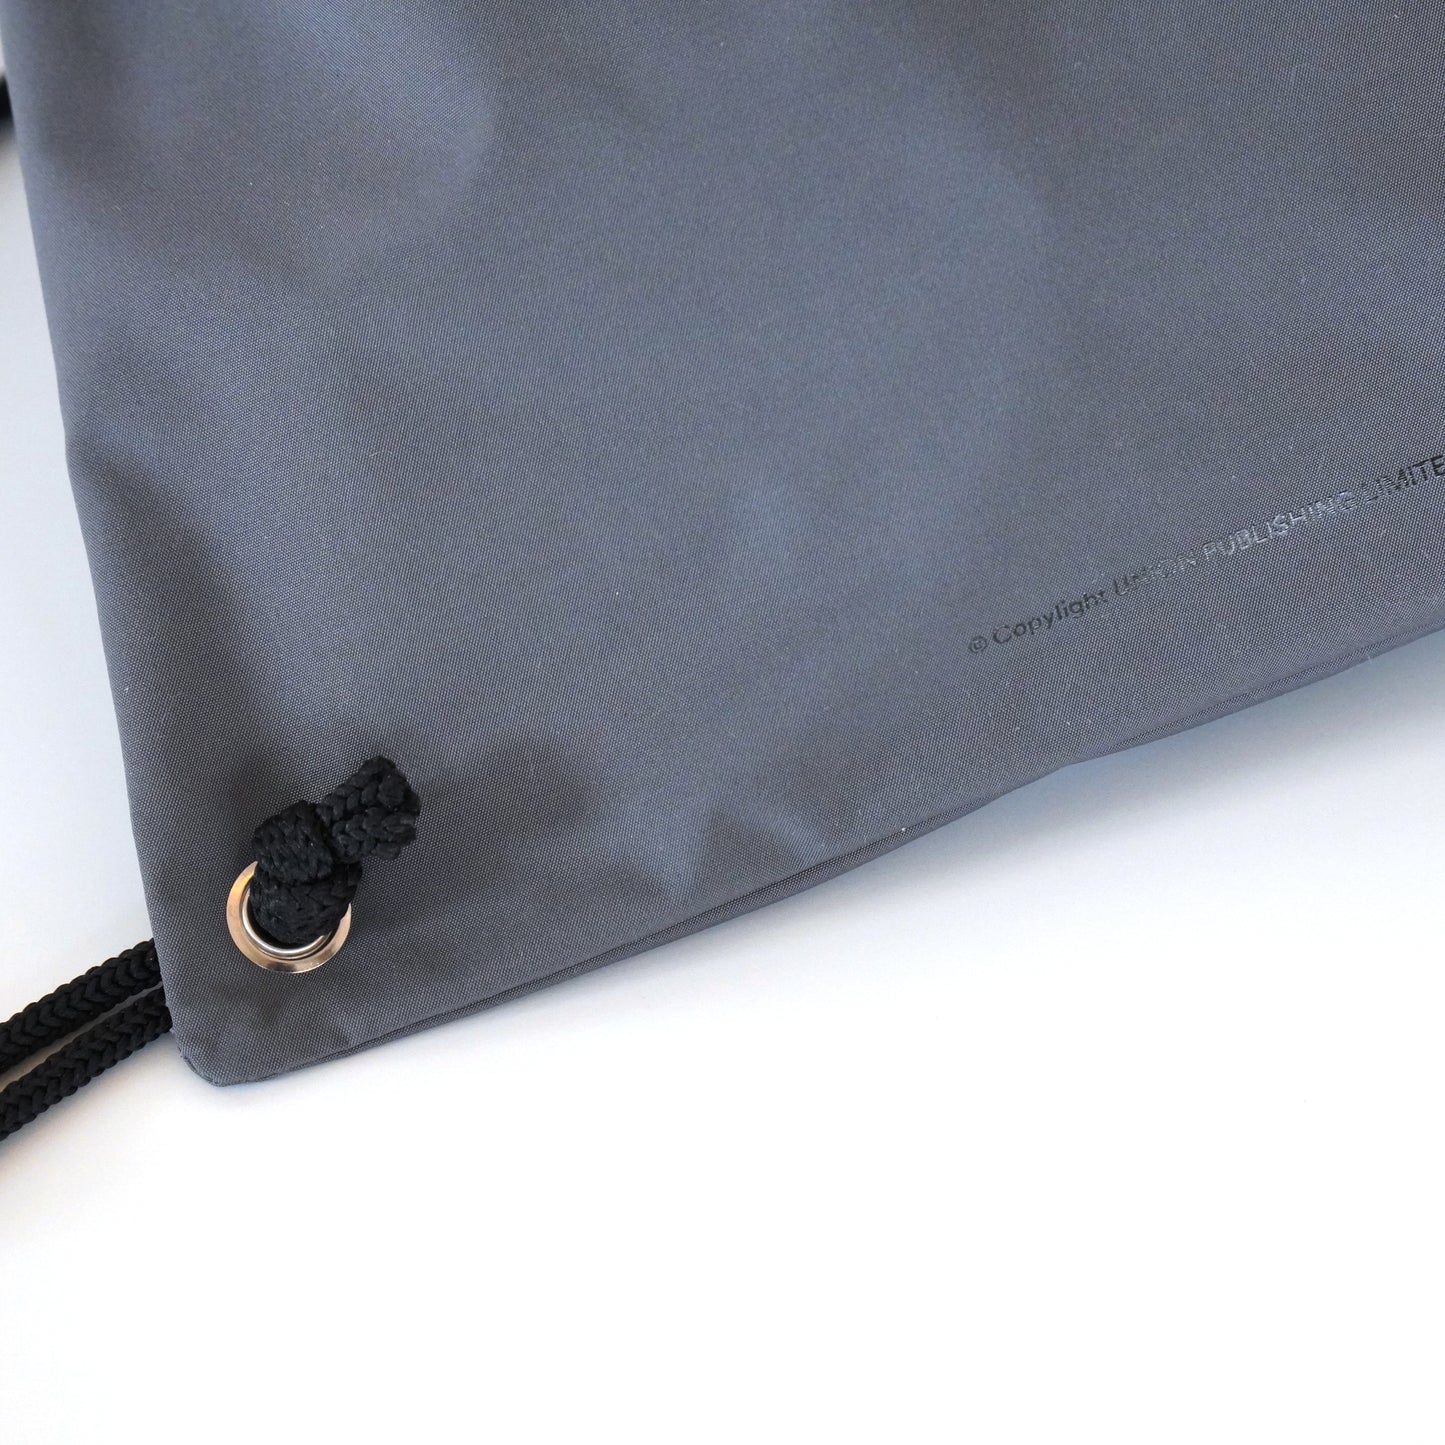 Union Backpack (Charcoal Grey) ユニオン バックパック (チャコールグレー)